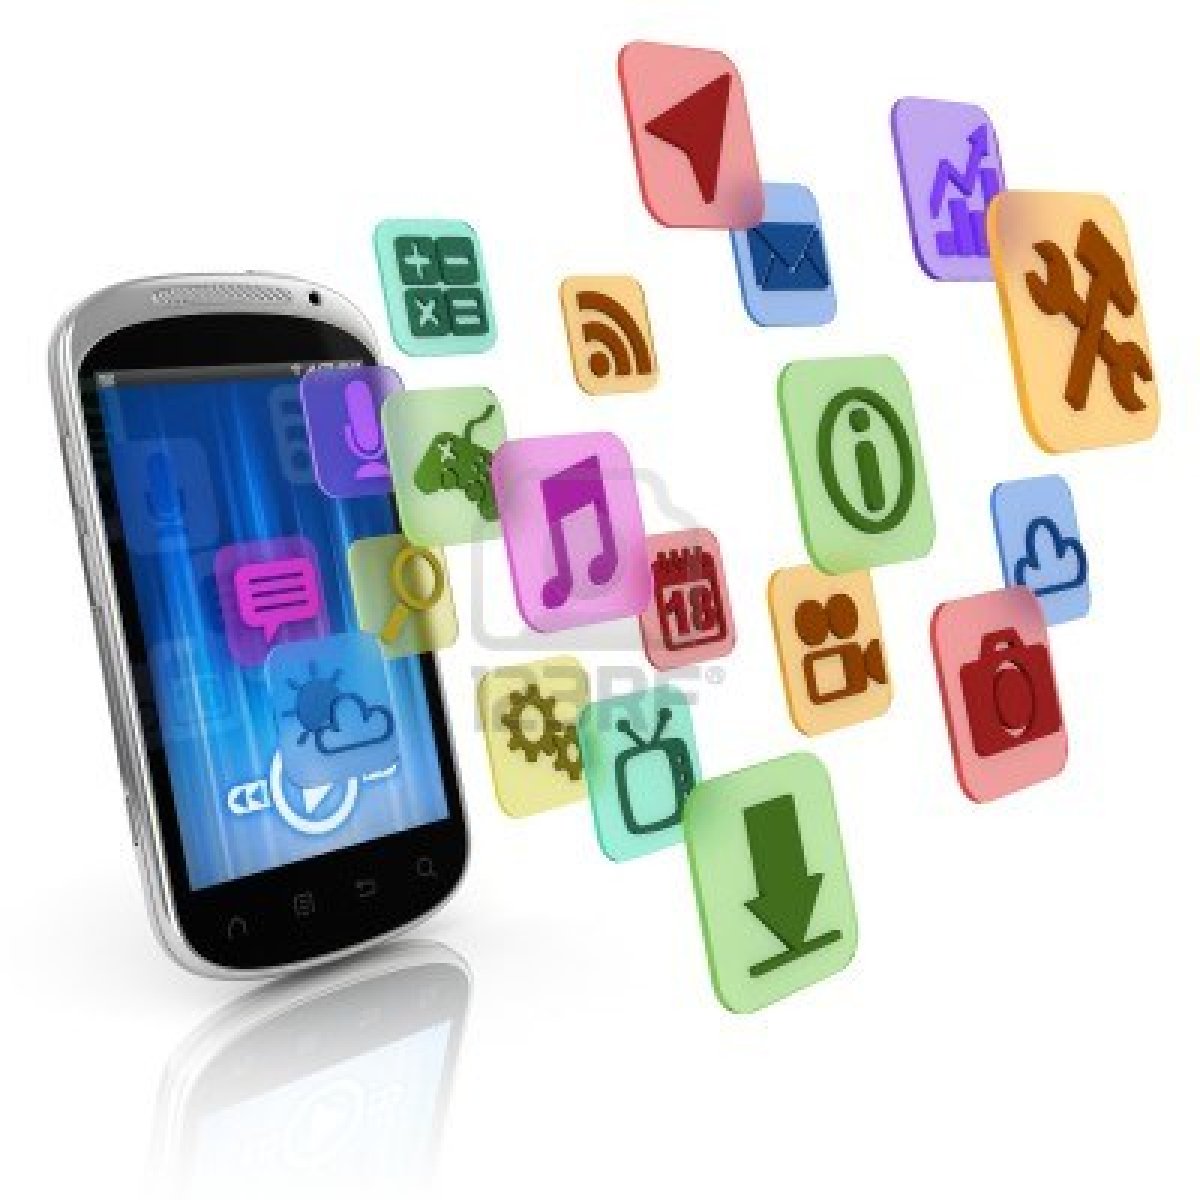 12330817-smart-phone-application-icons-app-3d-concept